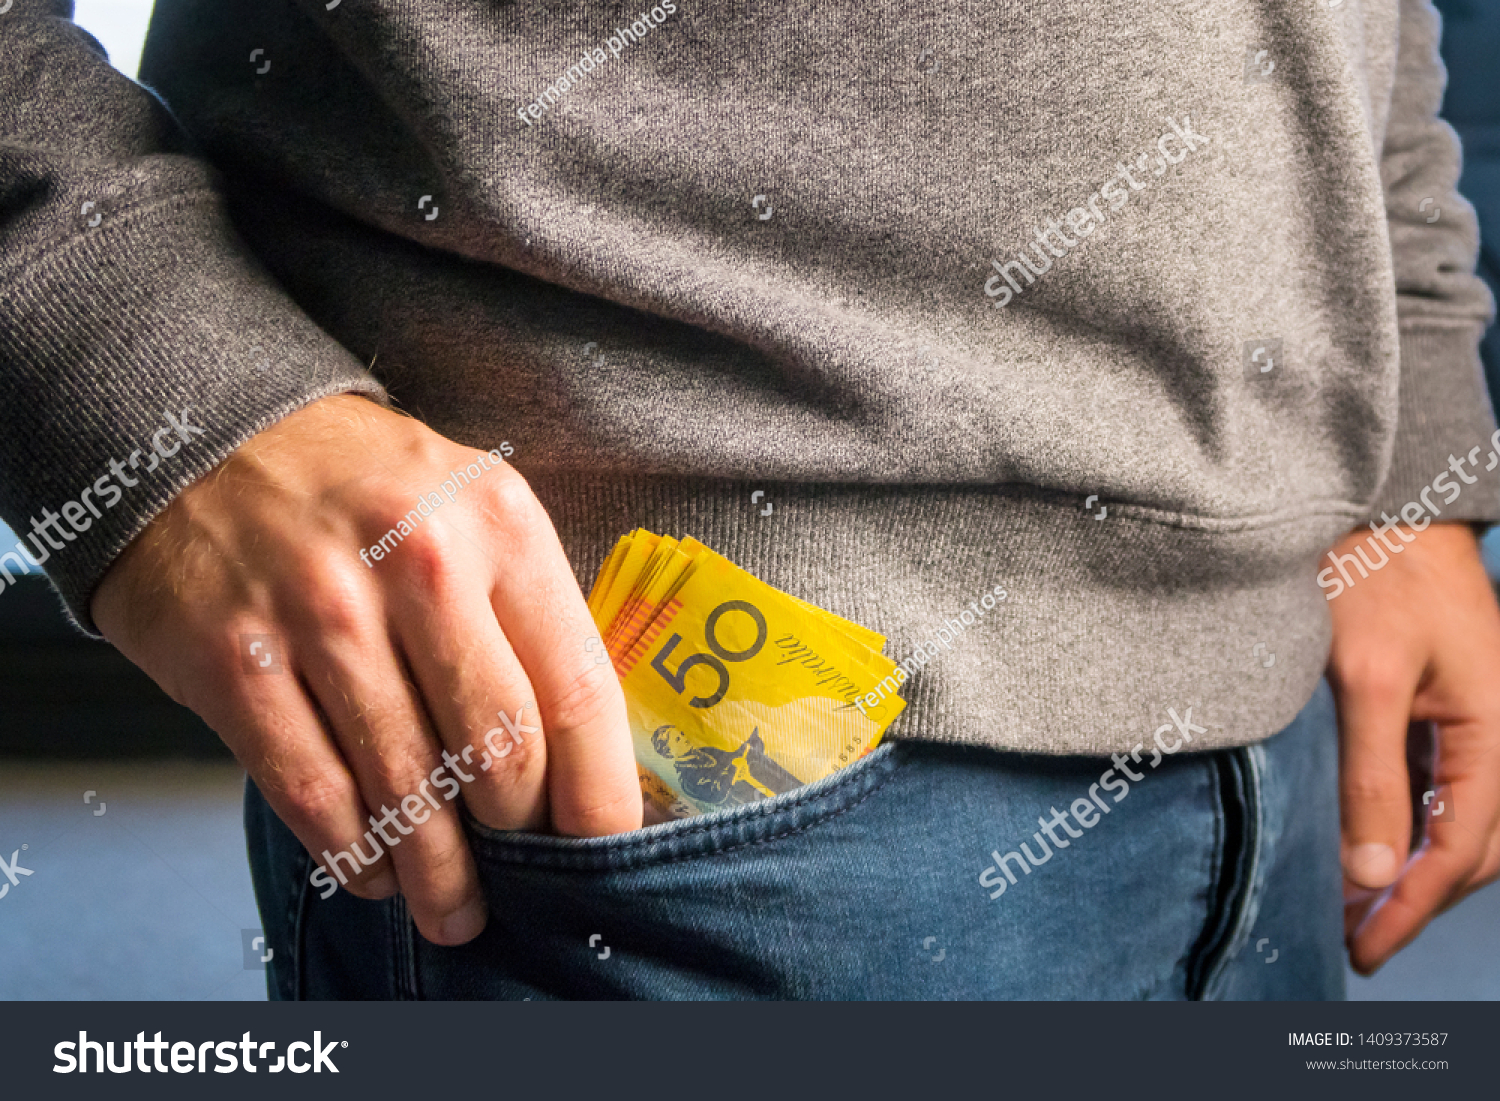 bjerg Manager dash Close Man Putting Australian Dollar Notes Stock Photo (Edit Now) 1409373587